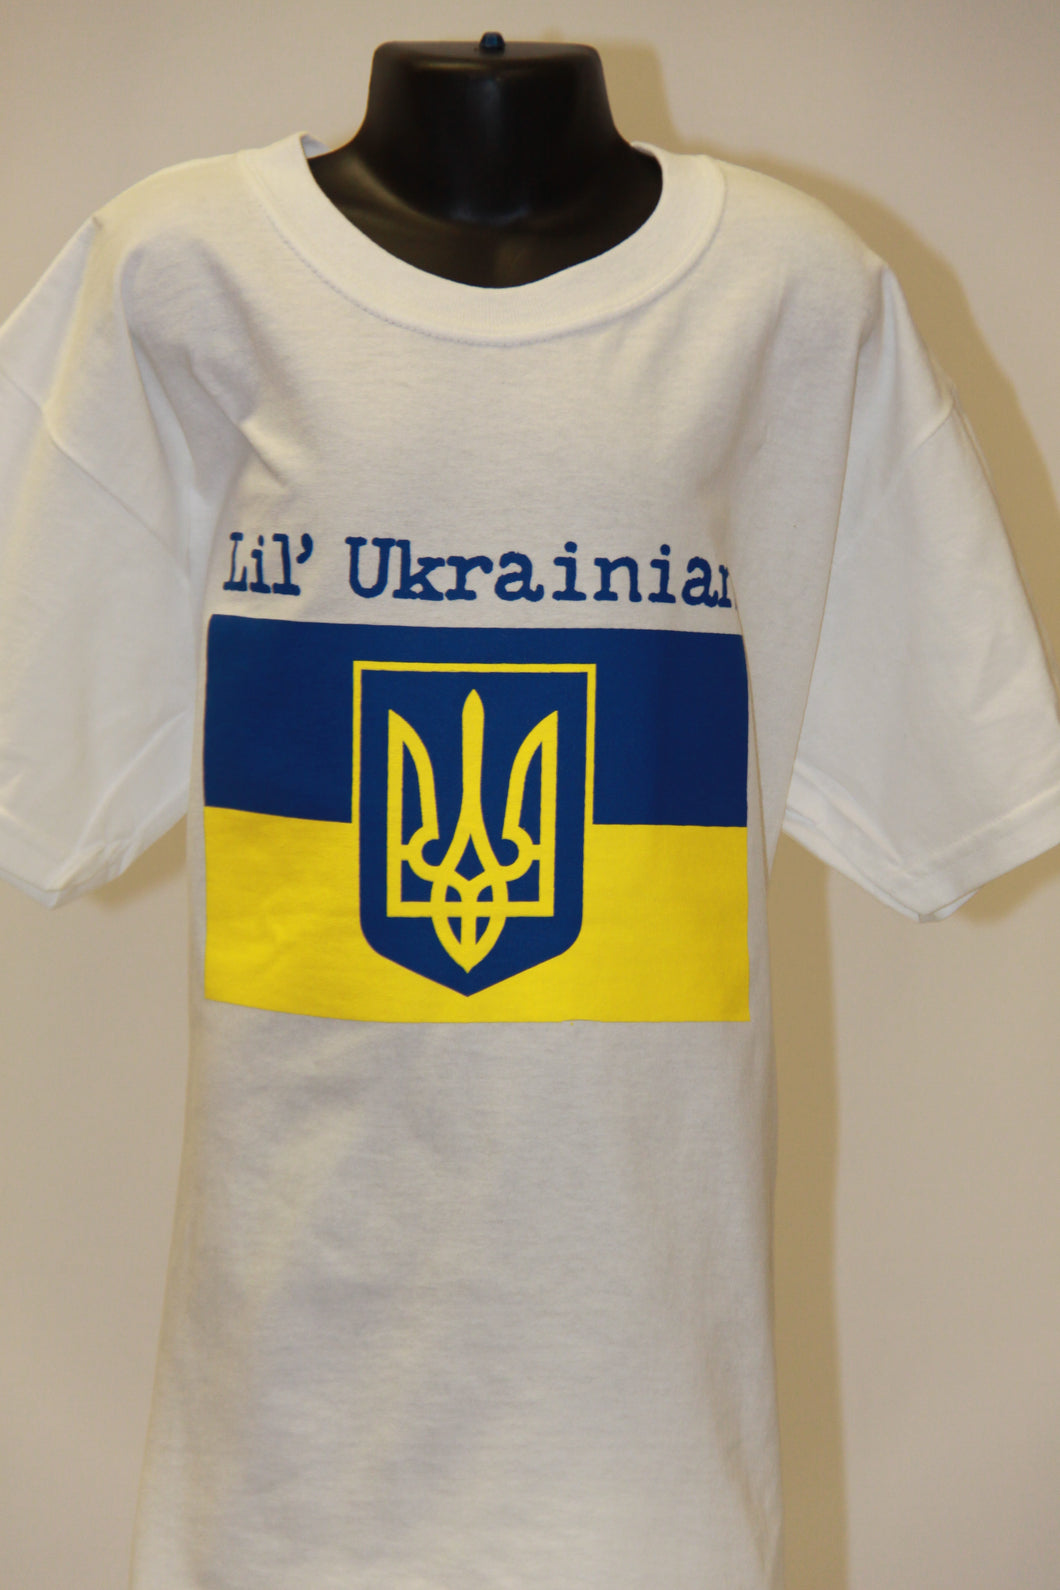 Lil' Ukrainian- White